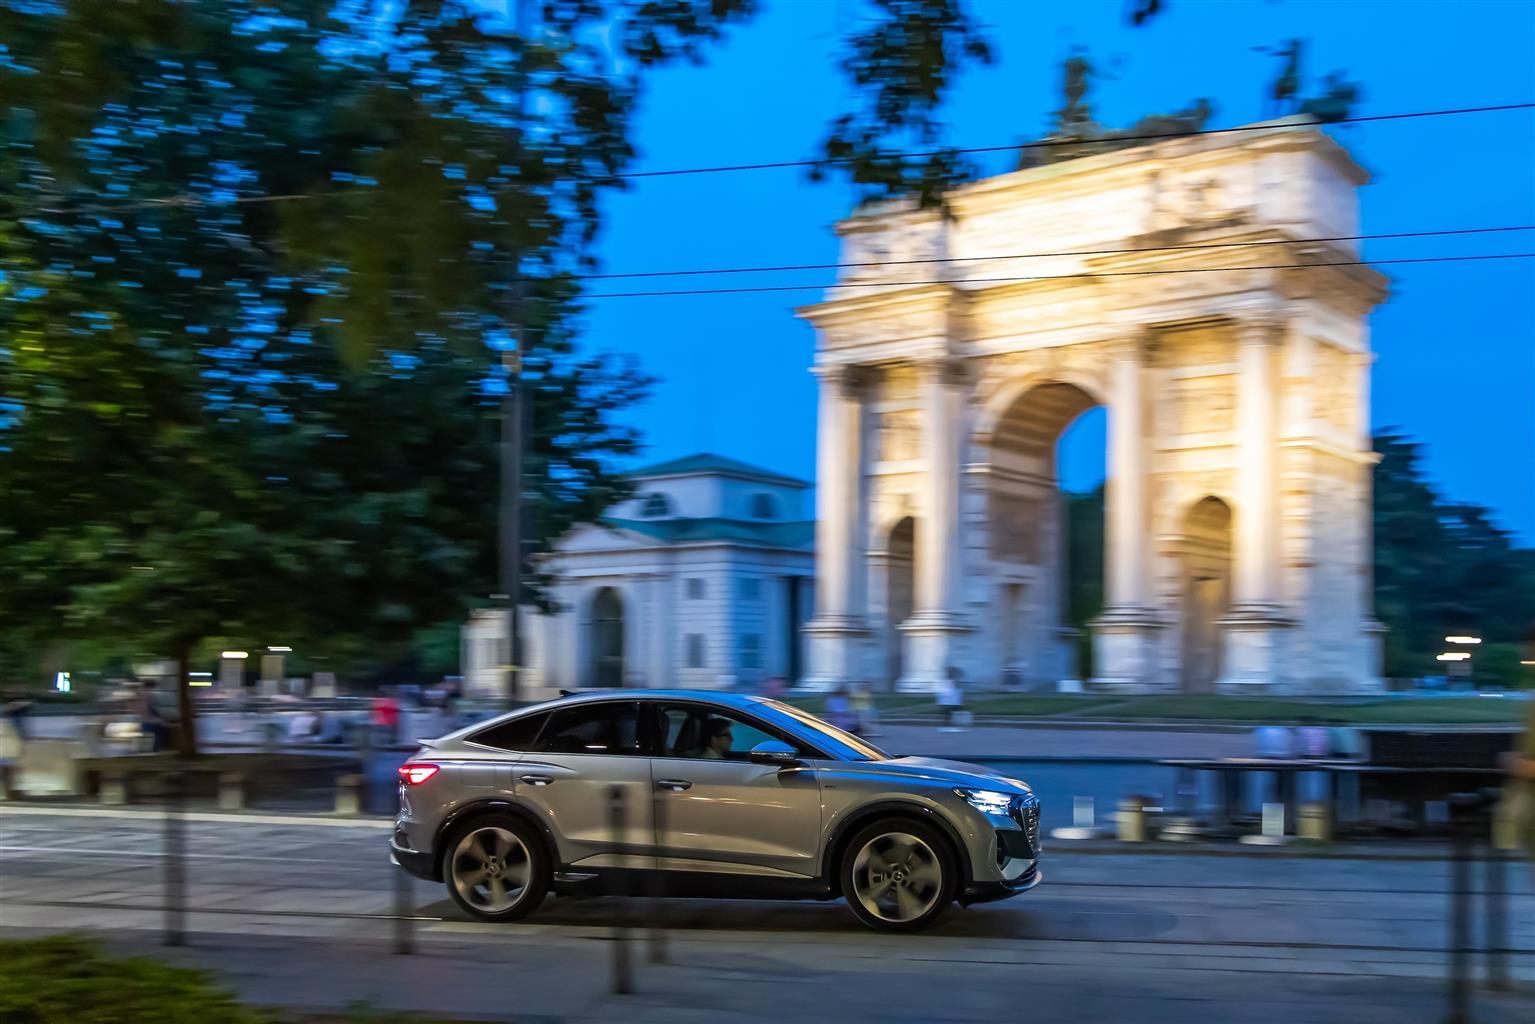 Audi House of Progress - Milano Design Week 2022